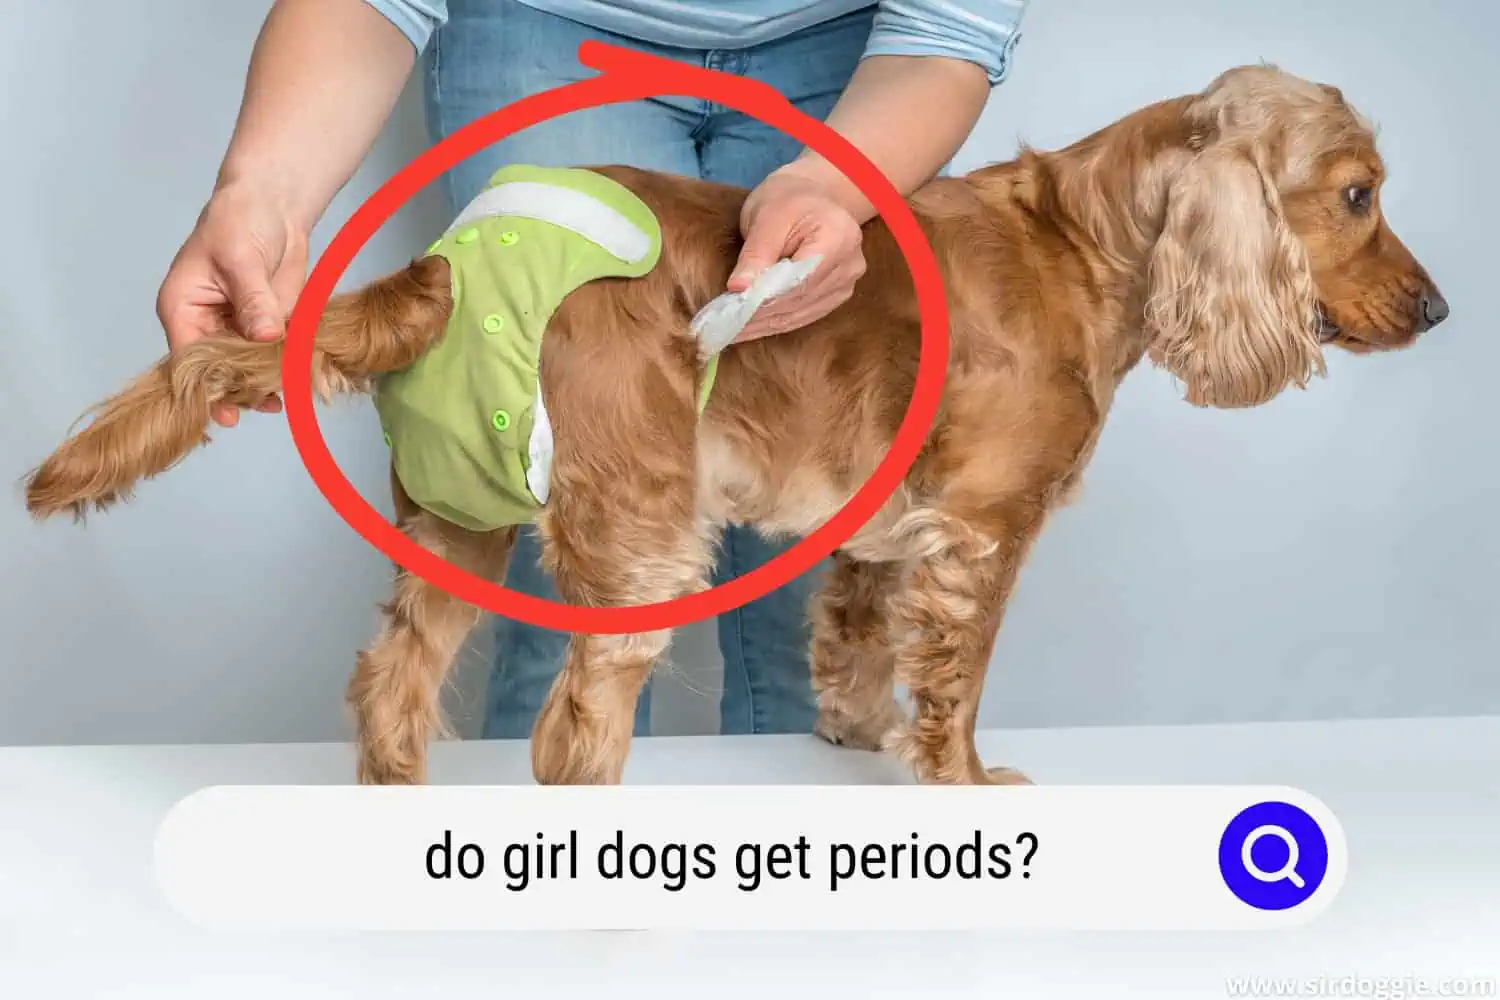 A vet doctor putting a diaper on a female dog having a period